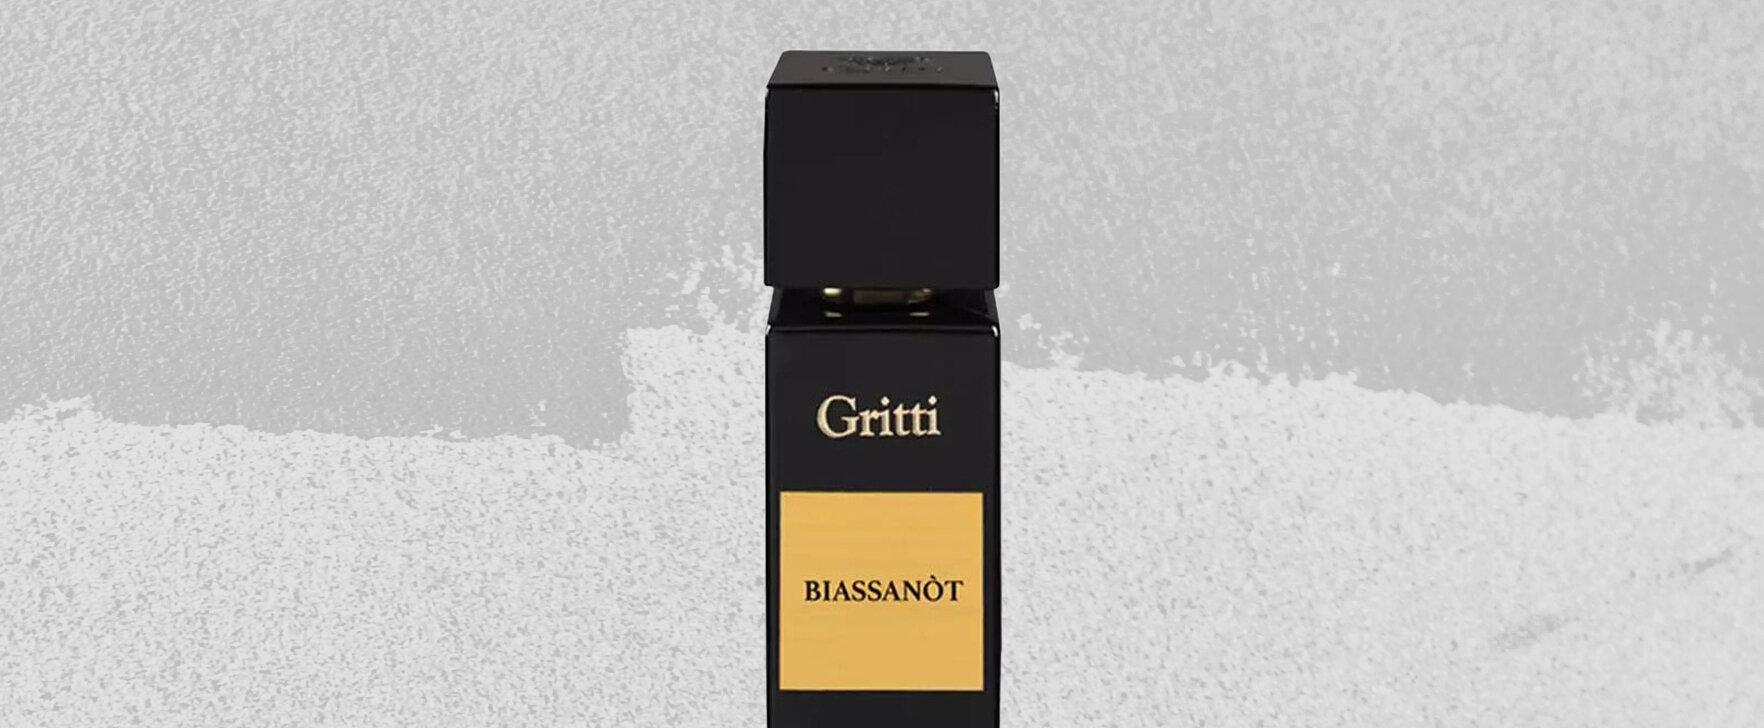 A Fragrance Journey Through the Night: The New "Biassanòt" Eau de Parfum From Gritti